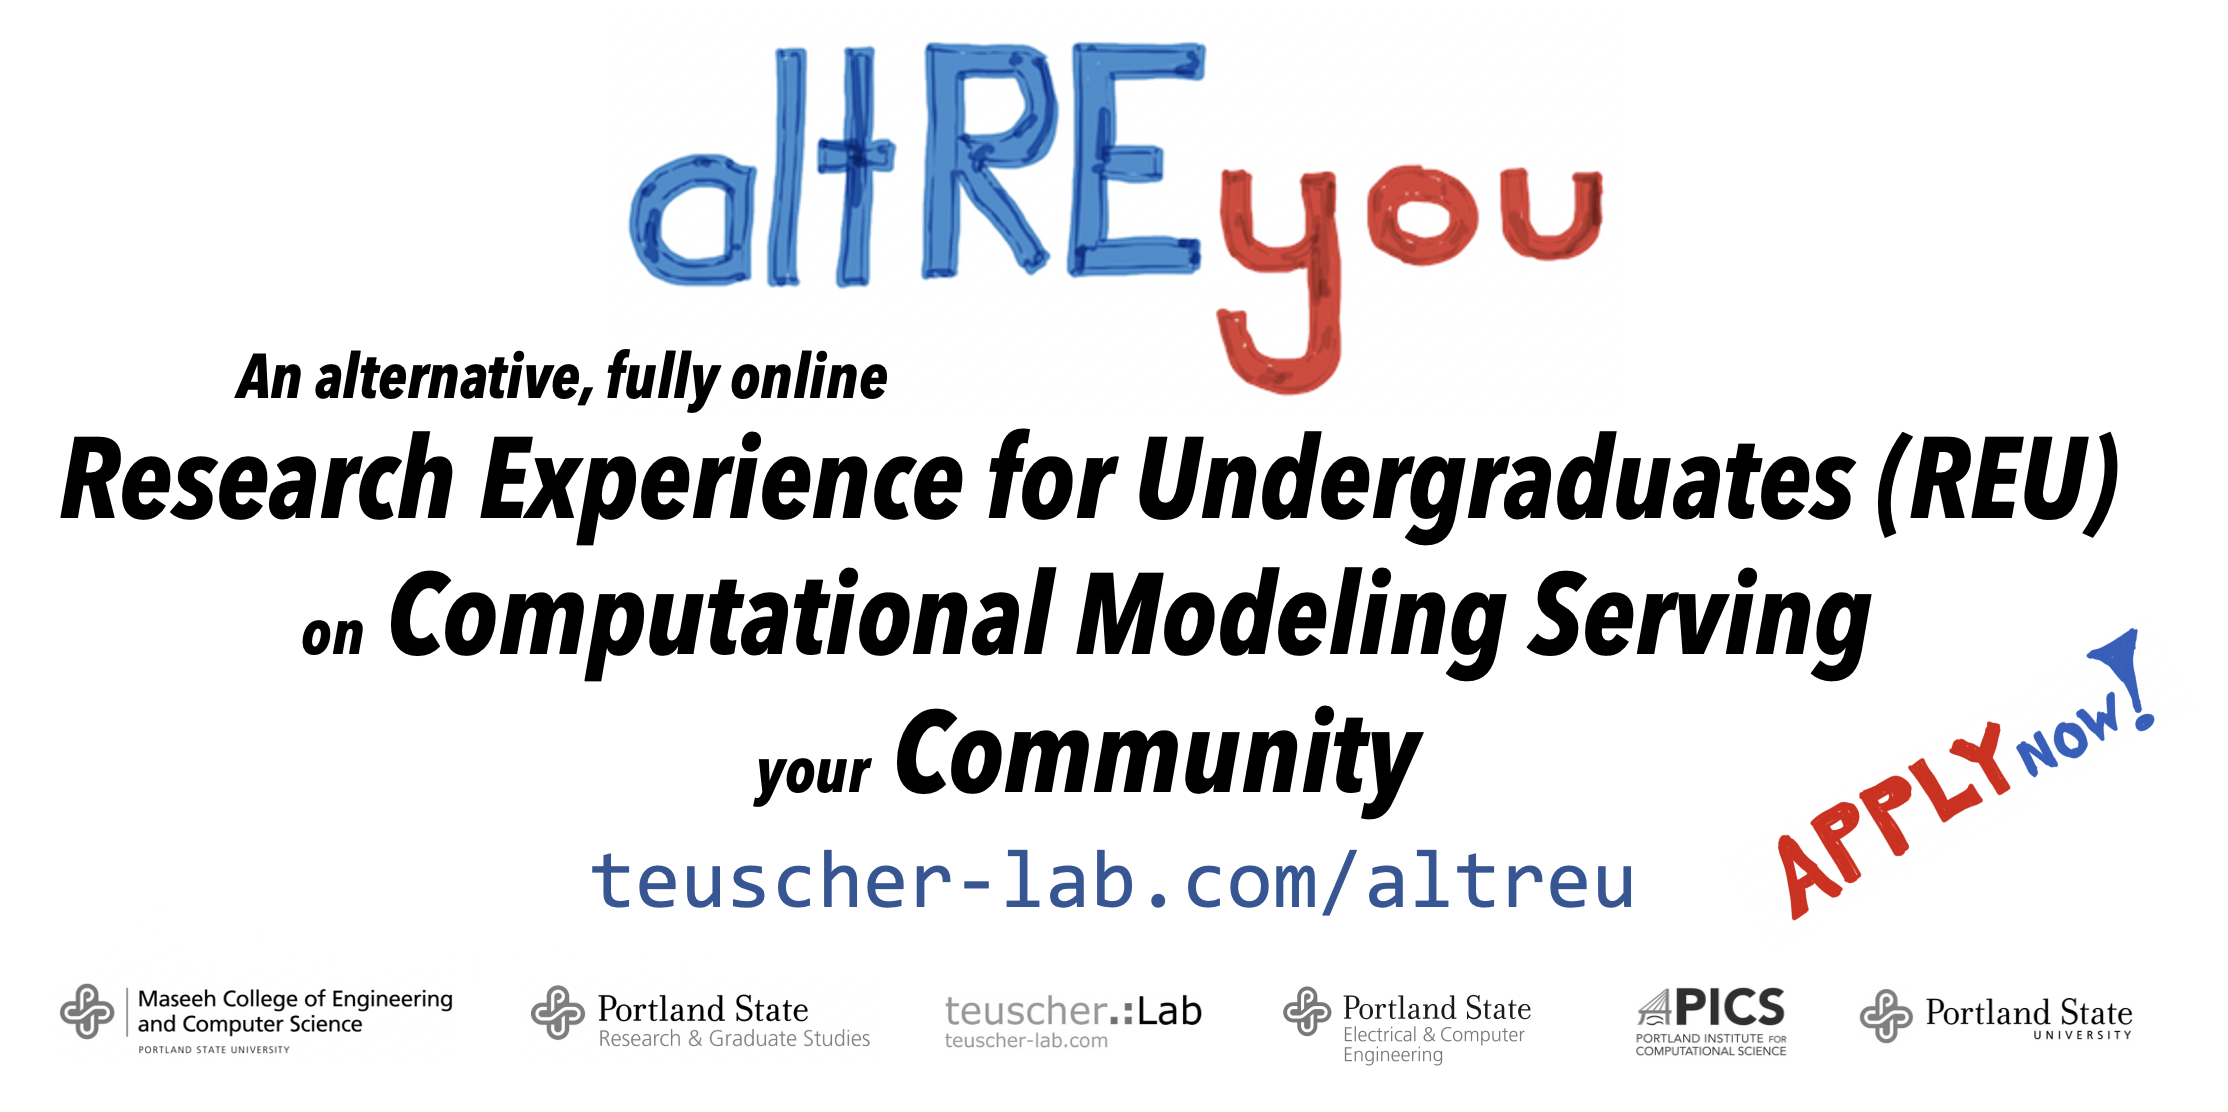 Apply now for our REU summer programs! teuscher.Lab